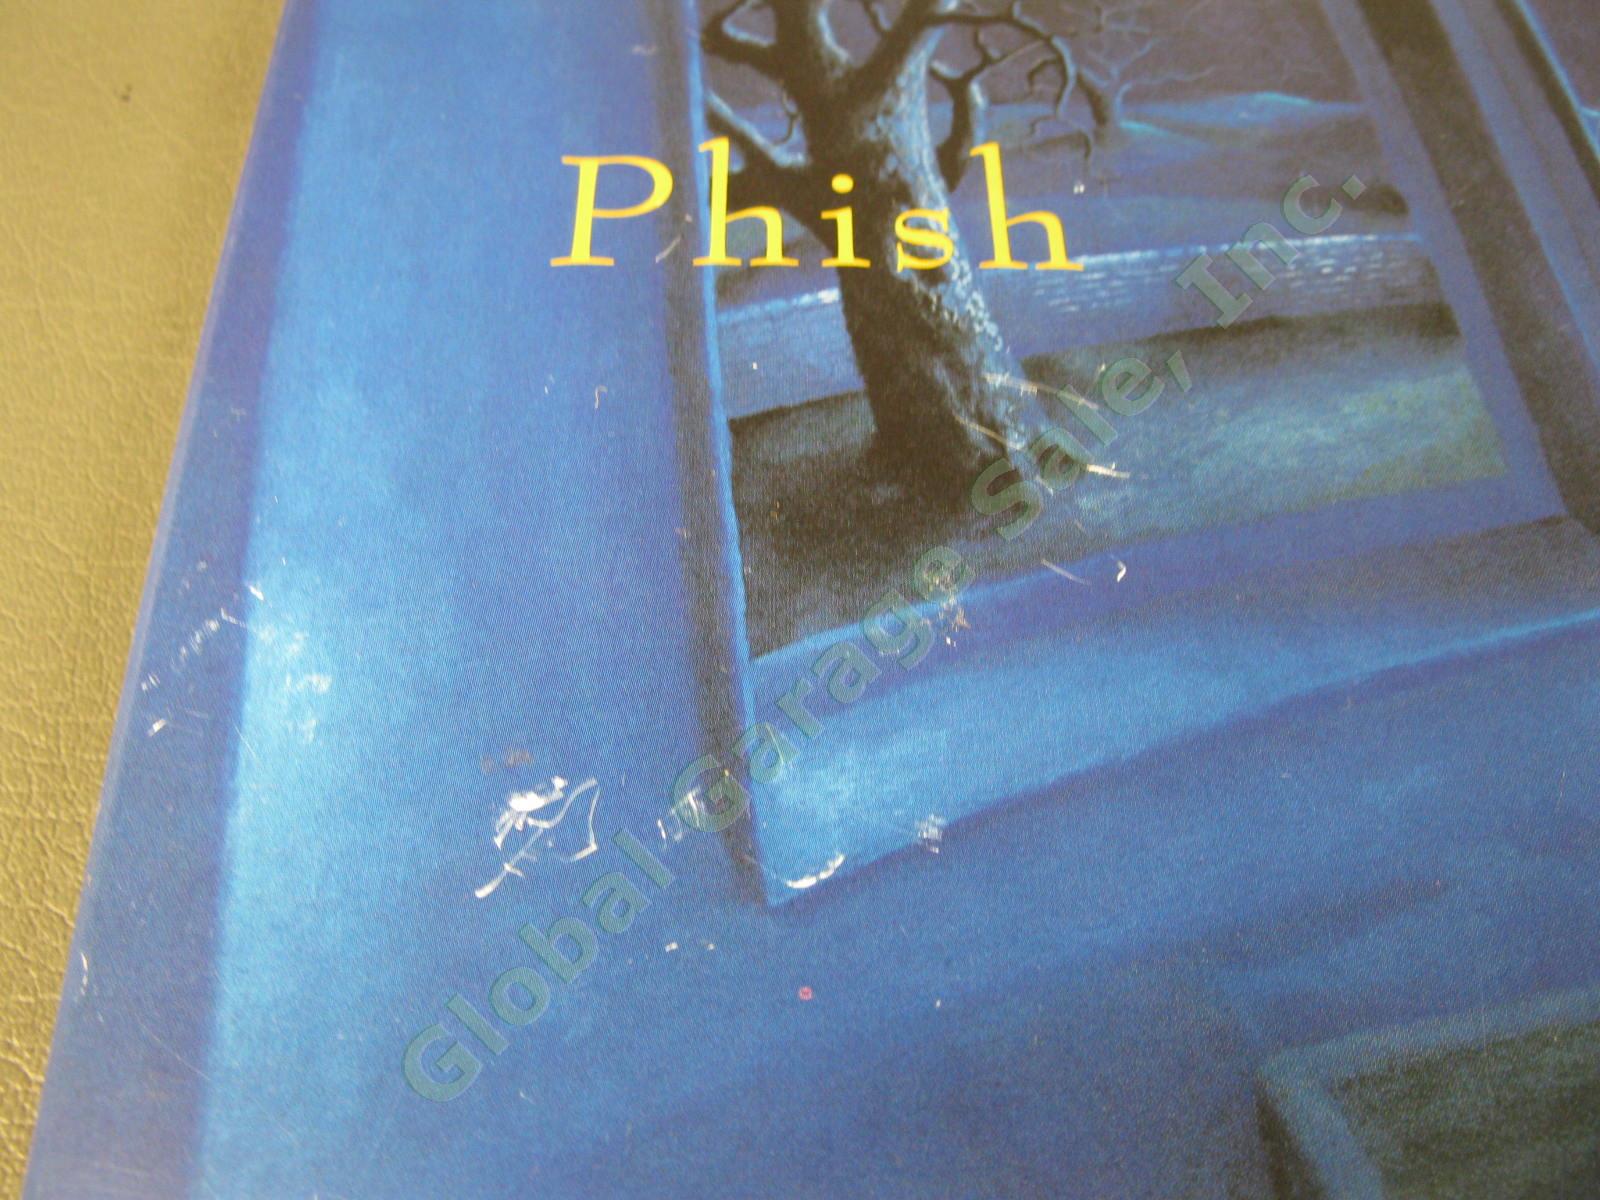 2015 PHISH Limited Edition Rift LP Record Album #8174 Welker Print Jemp1085 NR 10